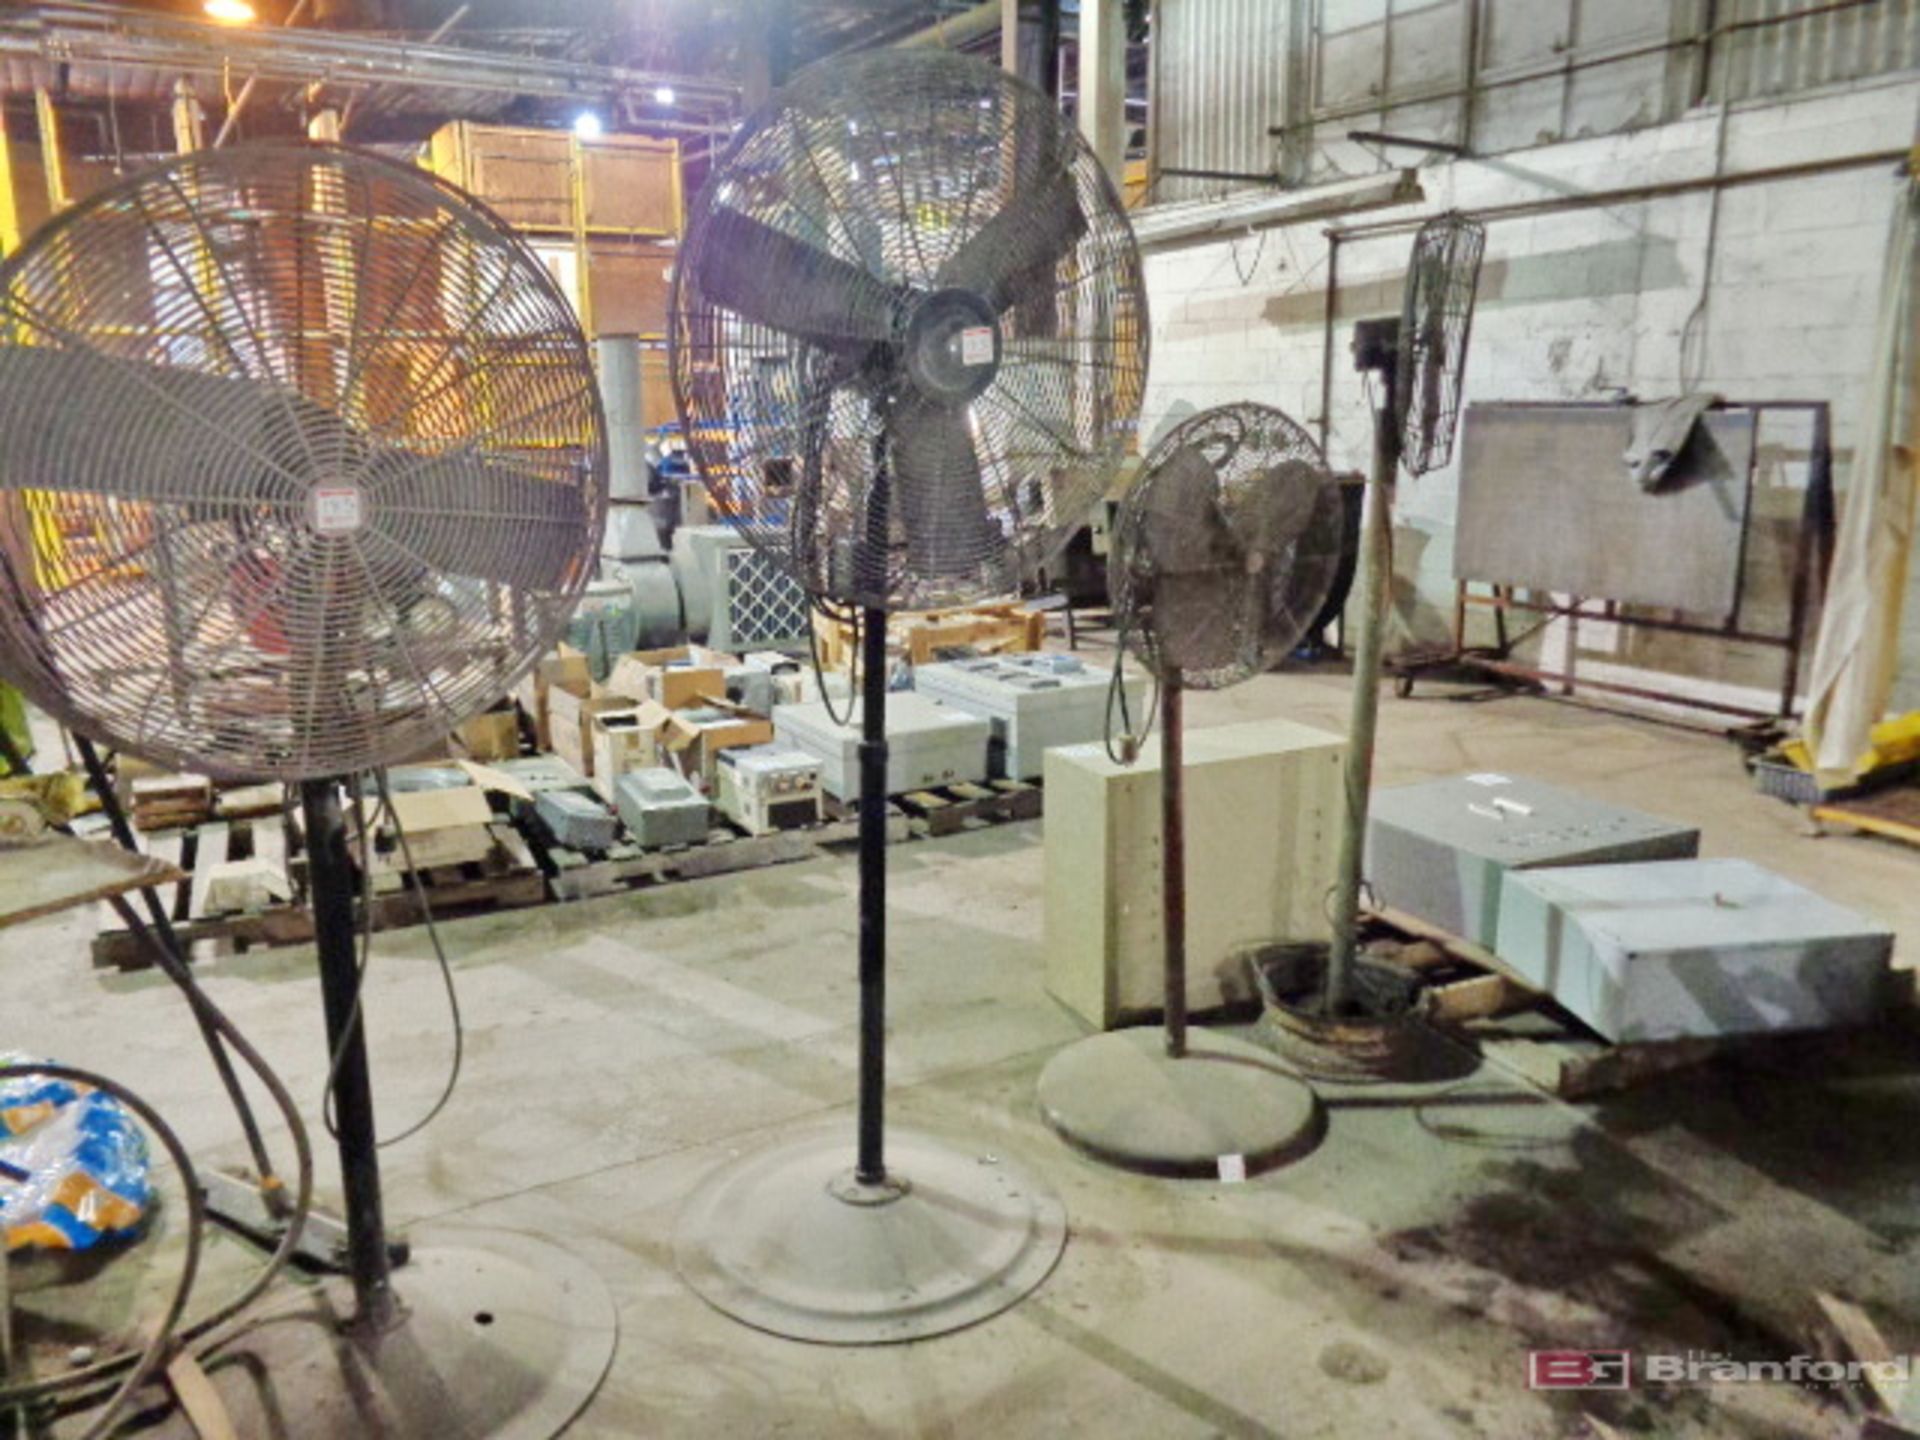 (4) Industrial Pedestal Based Floor Fans